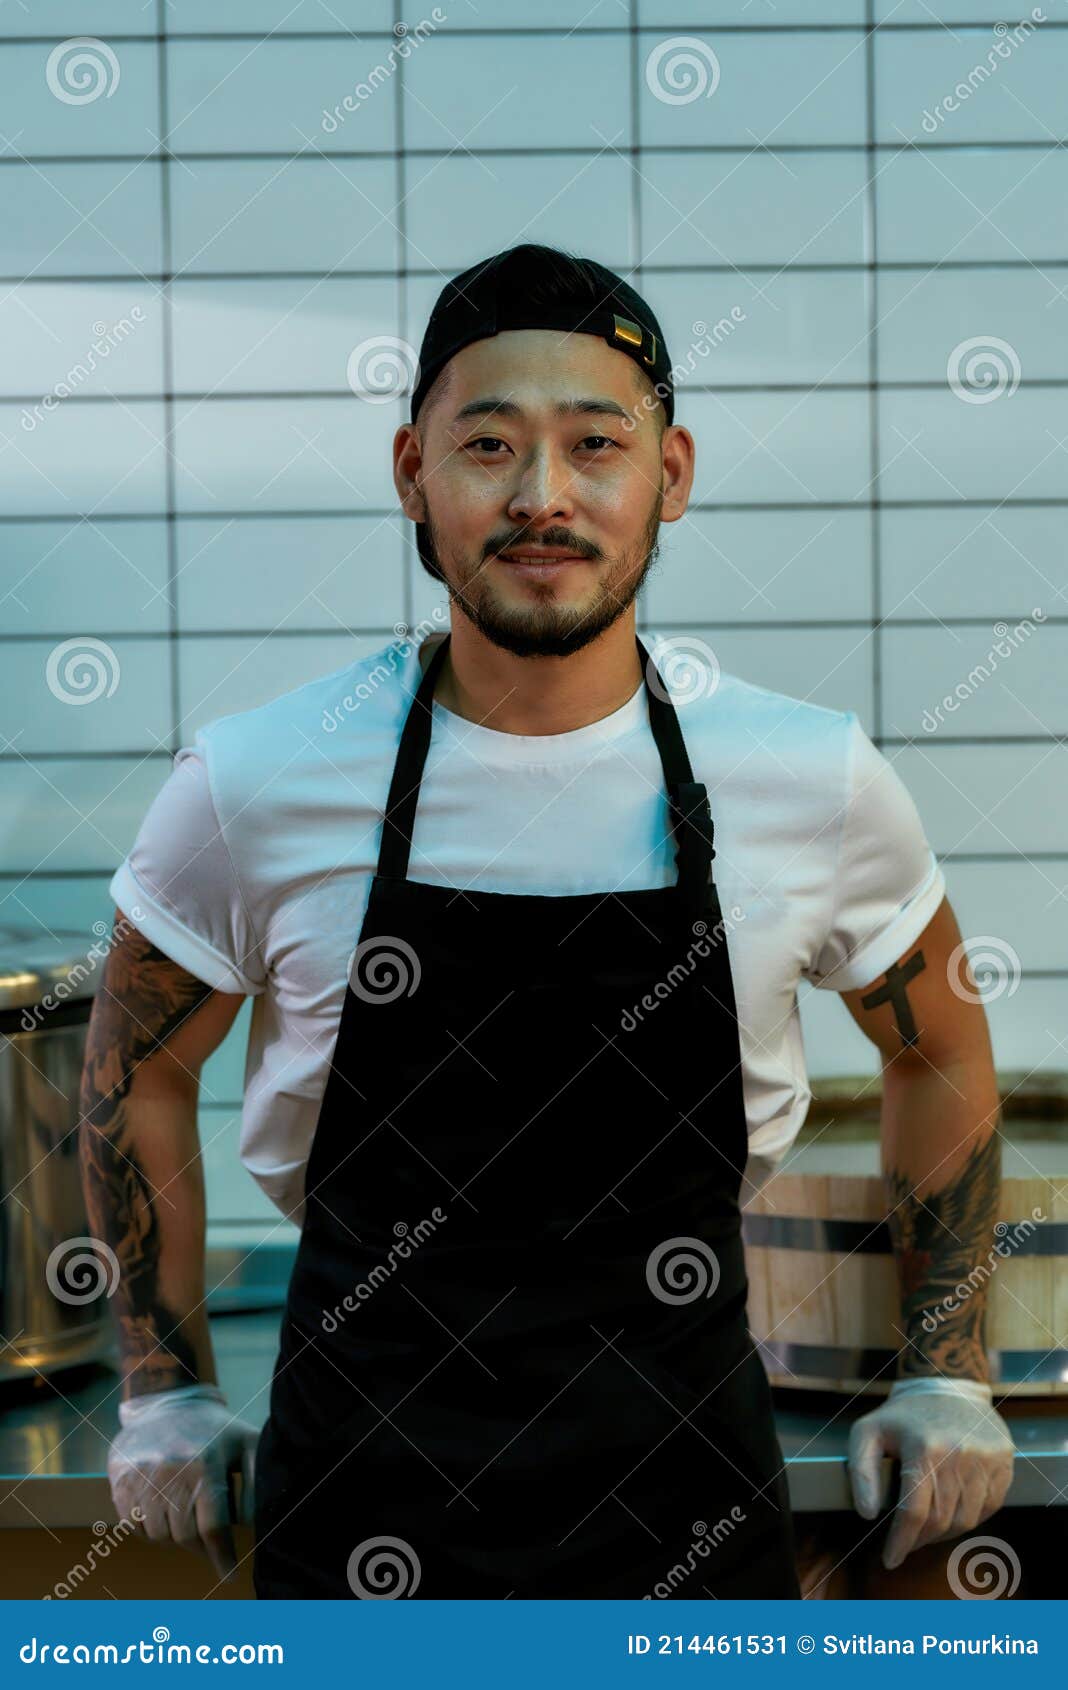 https://thumbs.dreamstime.com/z/asian-man-standing-kitchen-young-man-cap-apron-cook-room-cuisine-appliances-cooking-food-man-apron-214461531.jpg